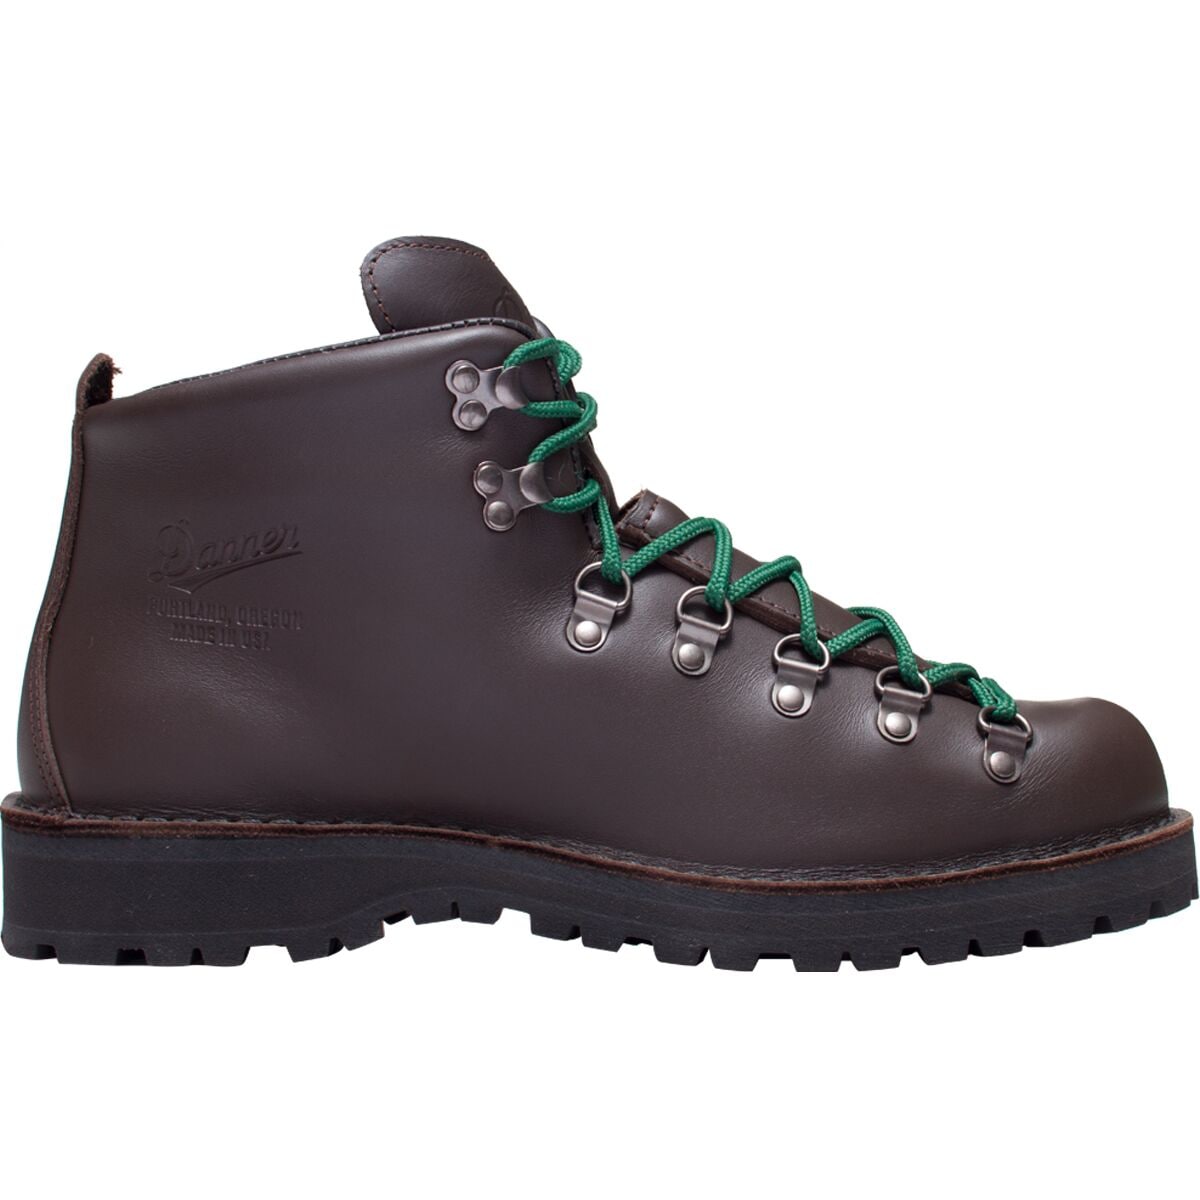 Mountain Light 2 Leather Hiking Boot - Men